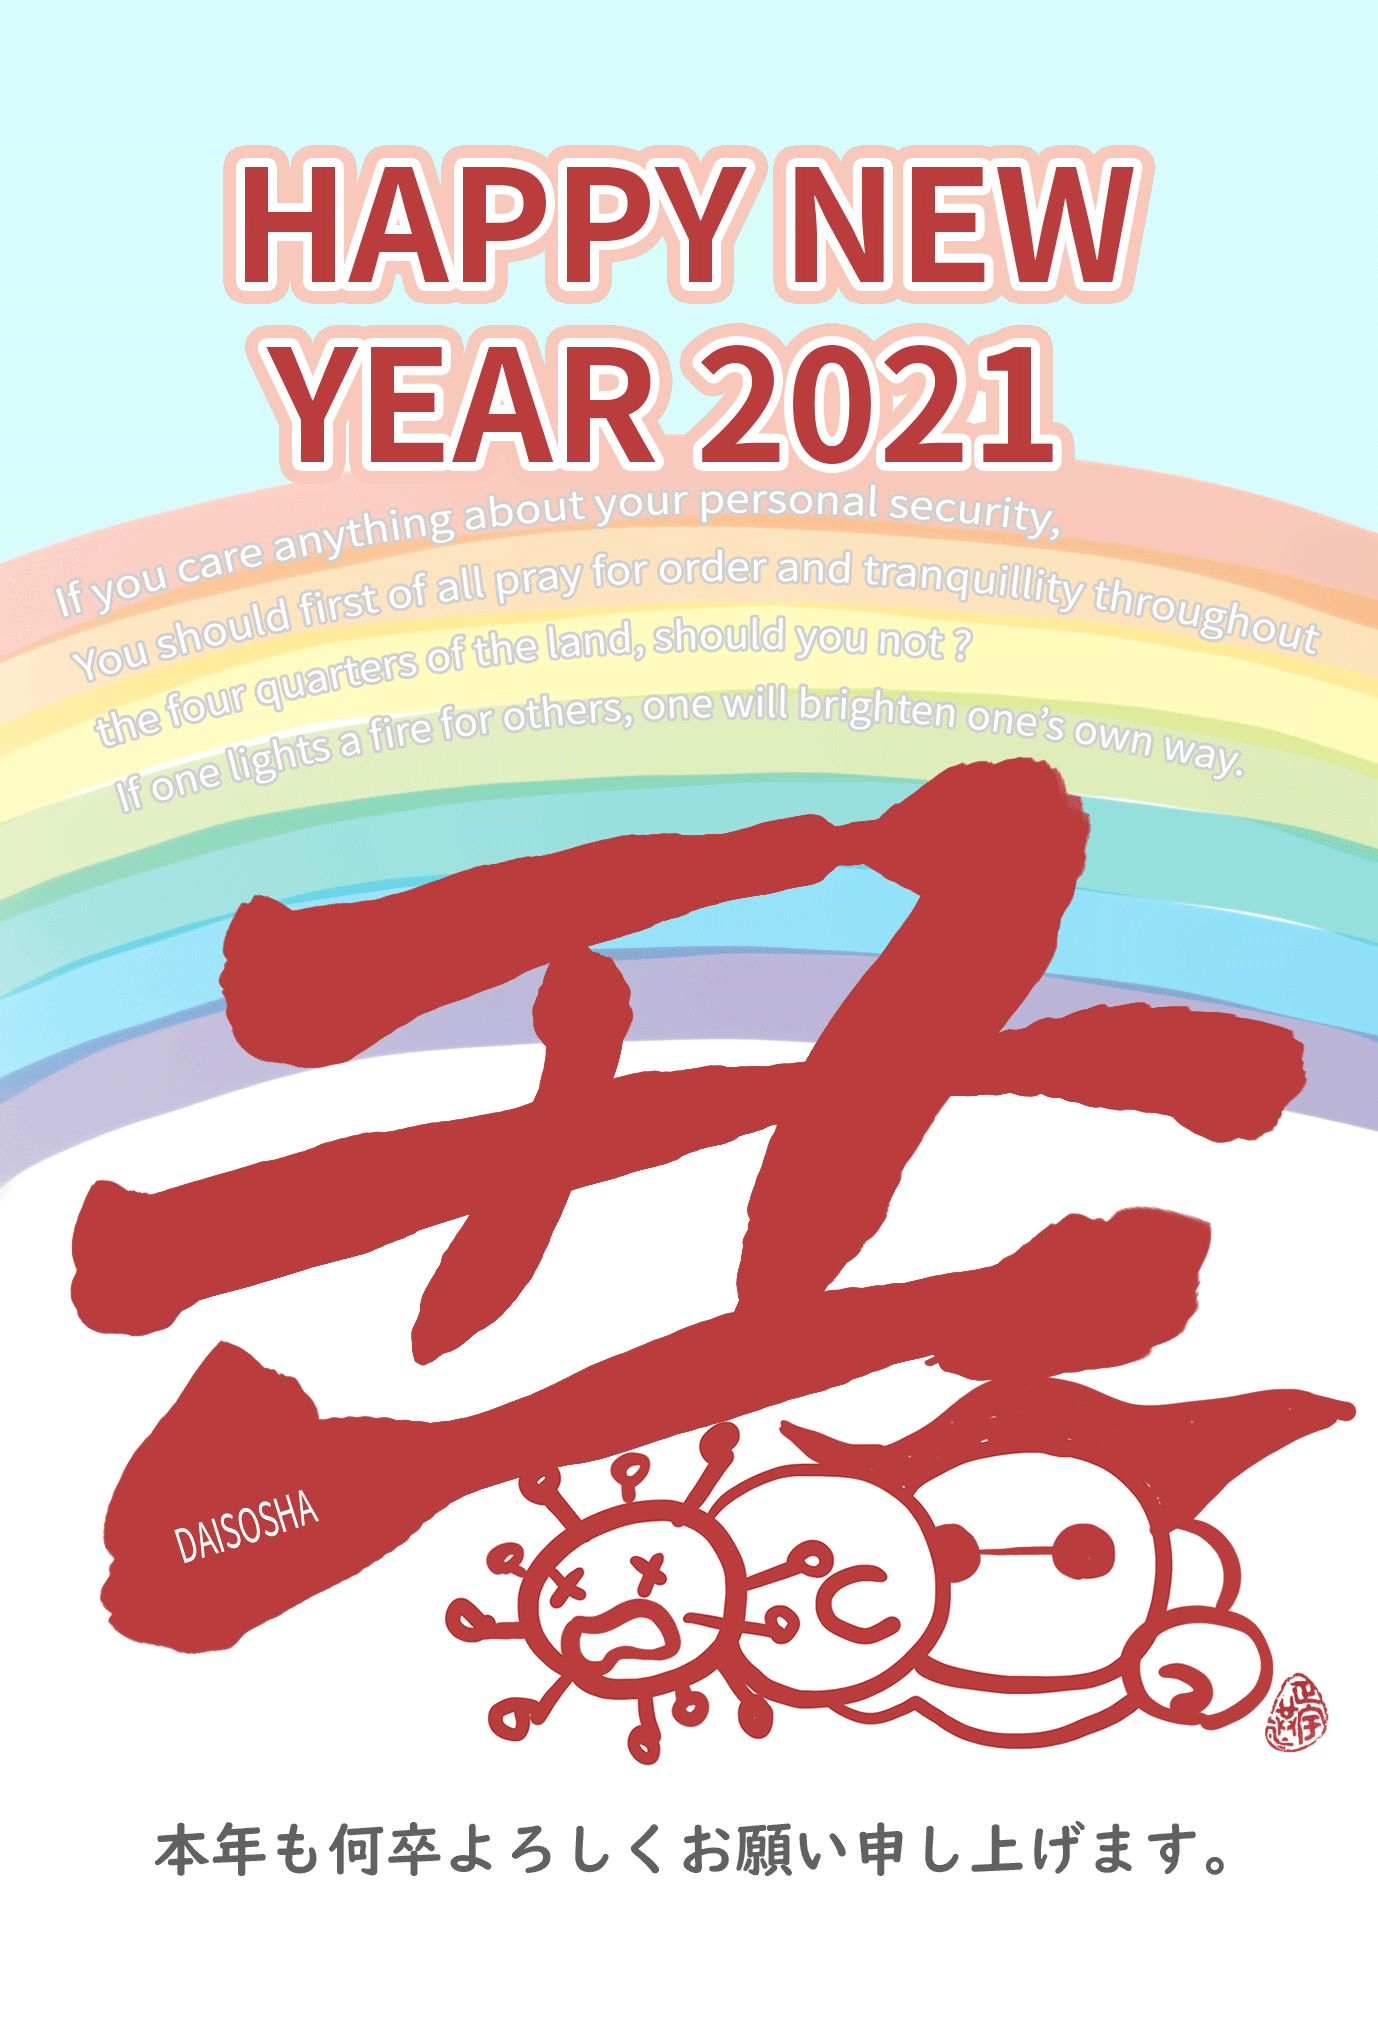 2021 Daisosha Web Design Portfolio New Year's card